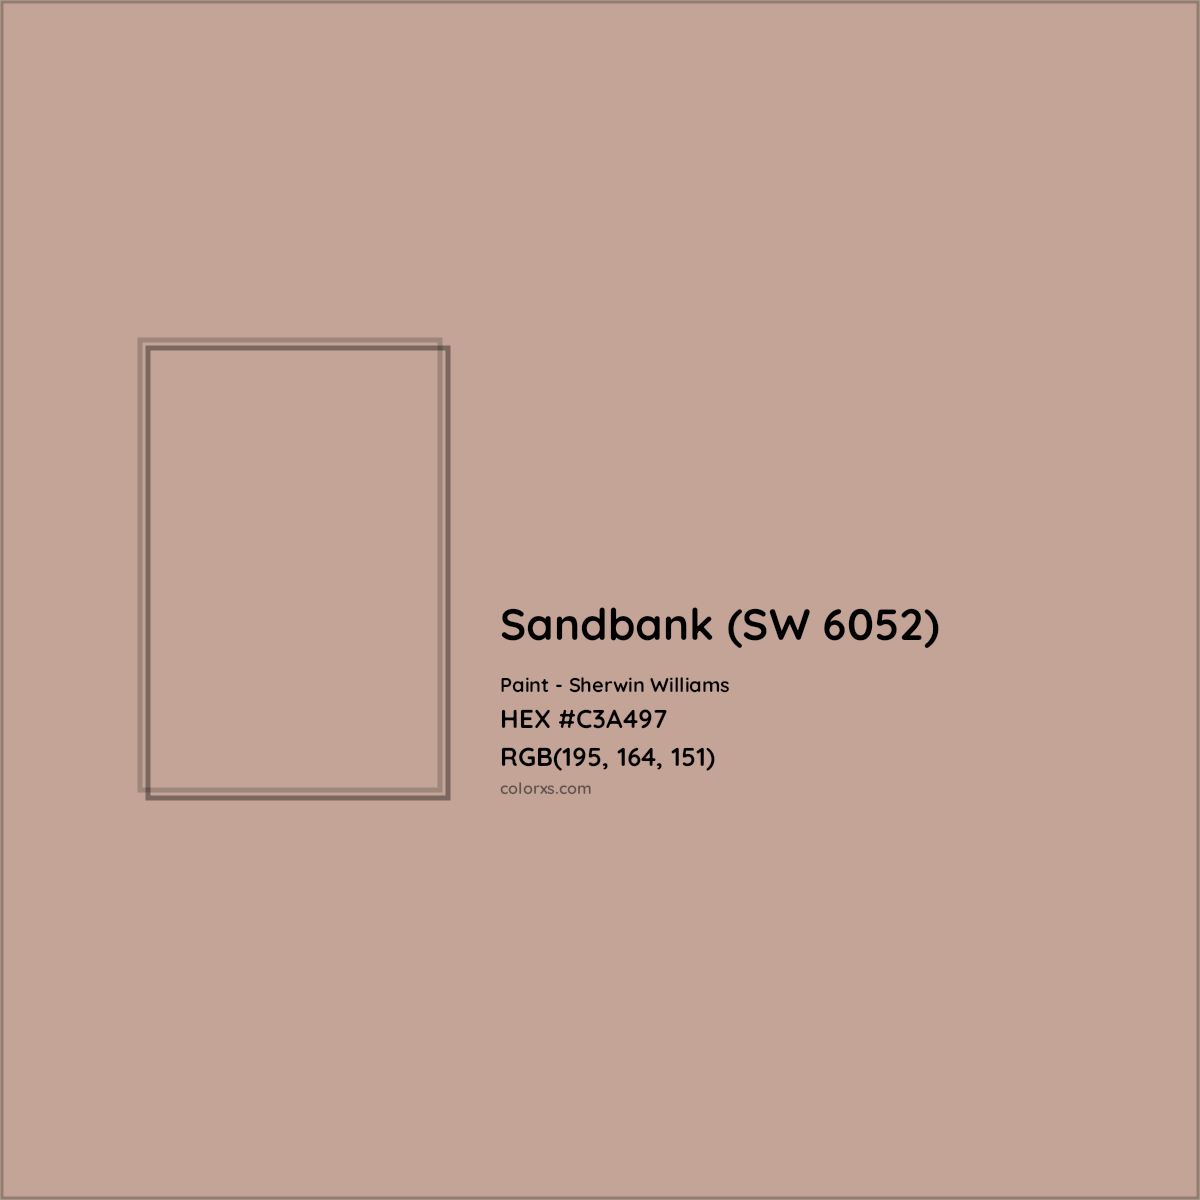 HEX #C3A497 Sandbank (SW 6052) Paint Sherwin Williams - Color Code